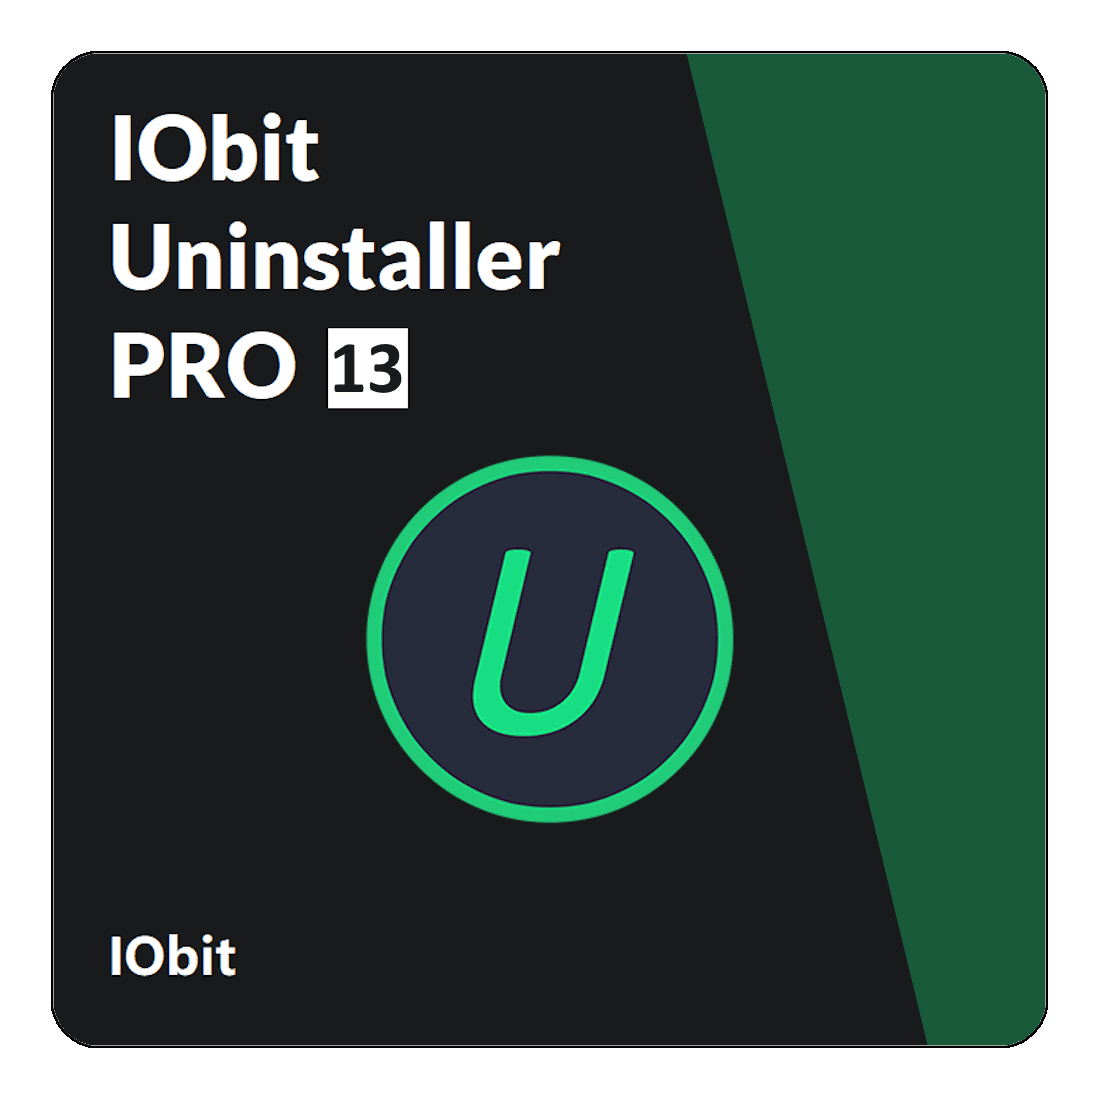 IObit Uninstaller Pro Mod APK: A modified version of IObit Uninstaller Pro app for Android devices.